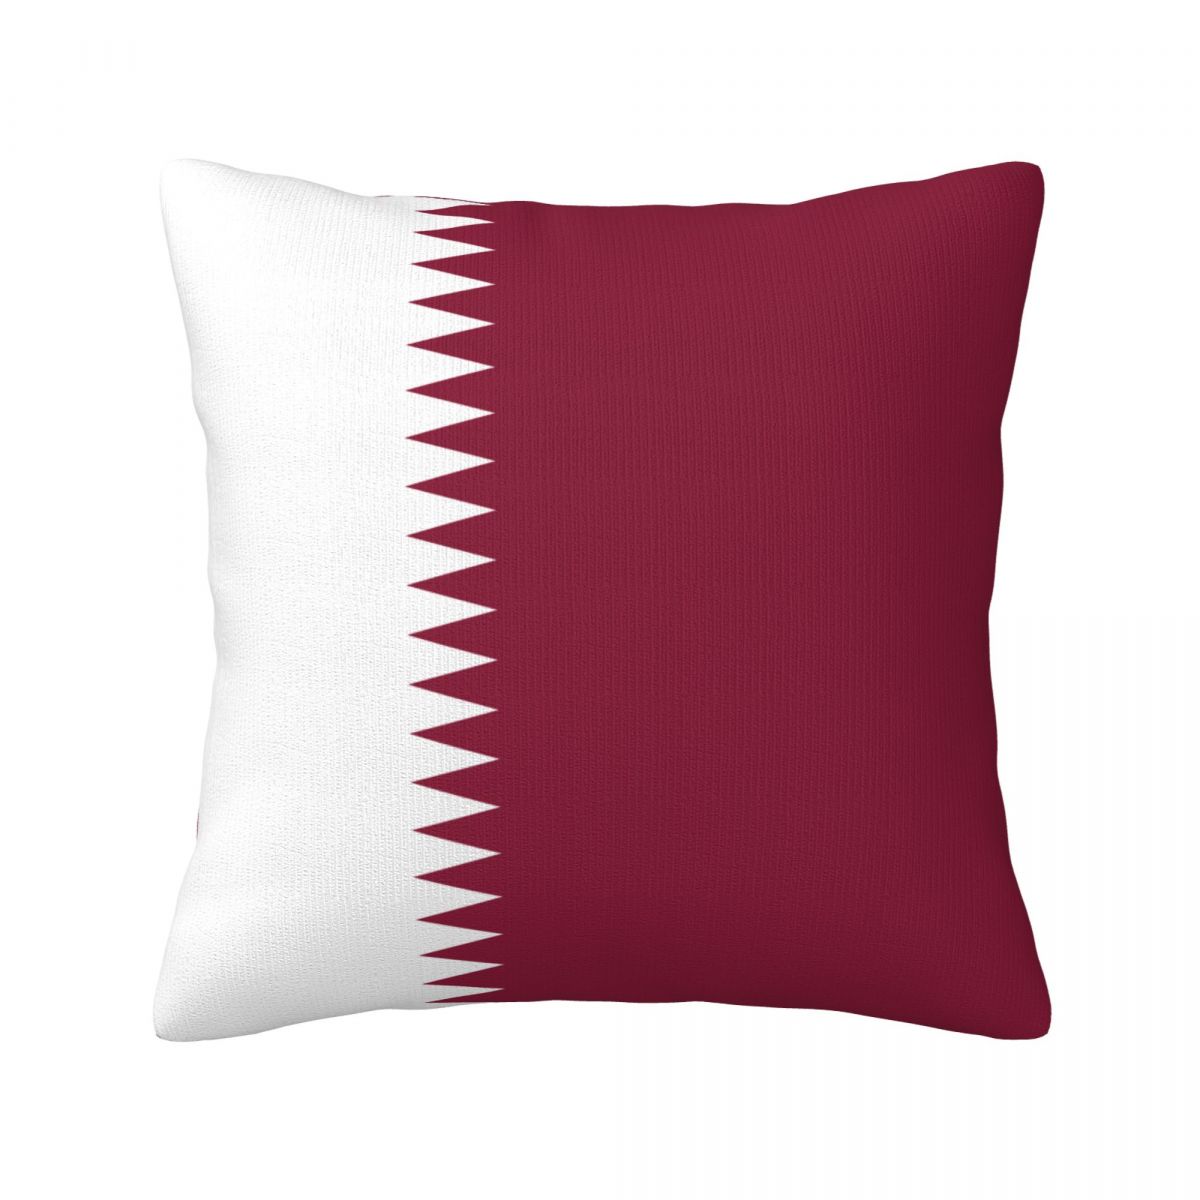 Qatar Flag Decorative Square Throw Pillow Covers